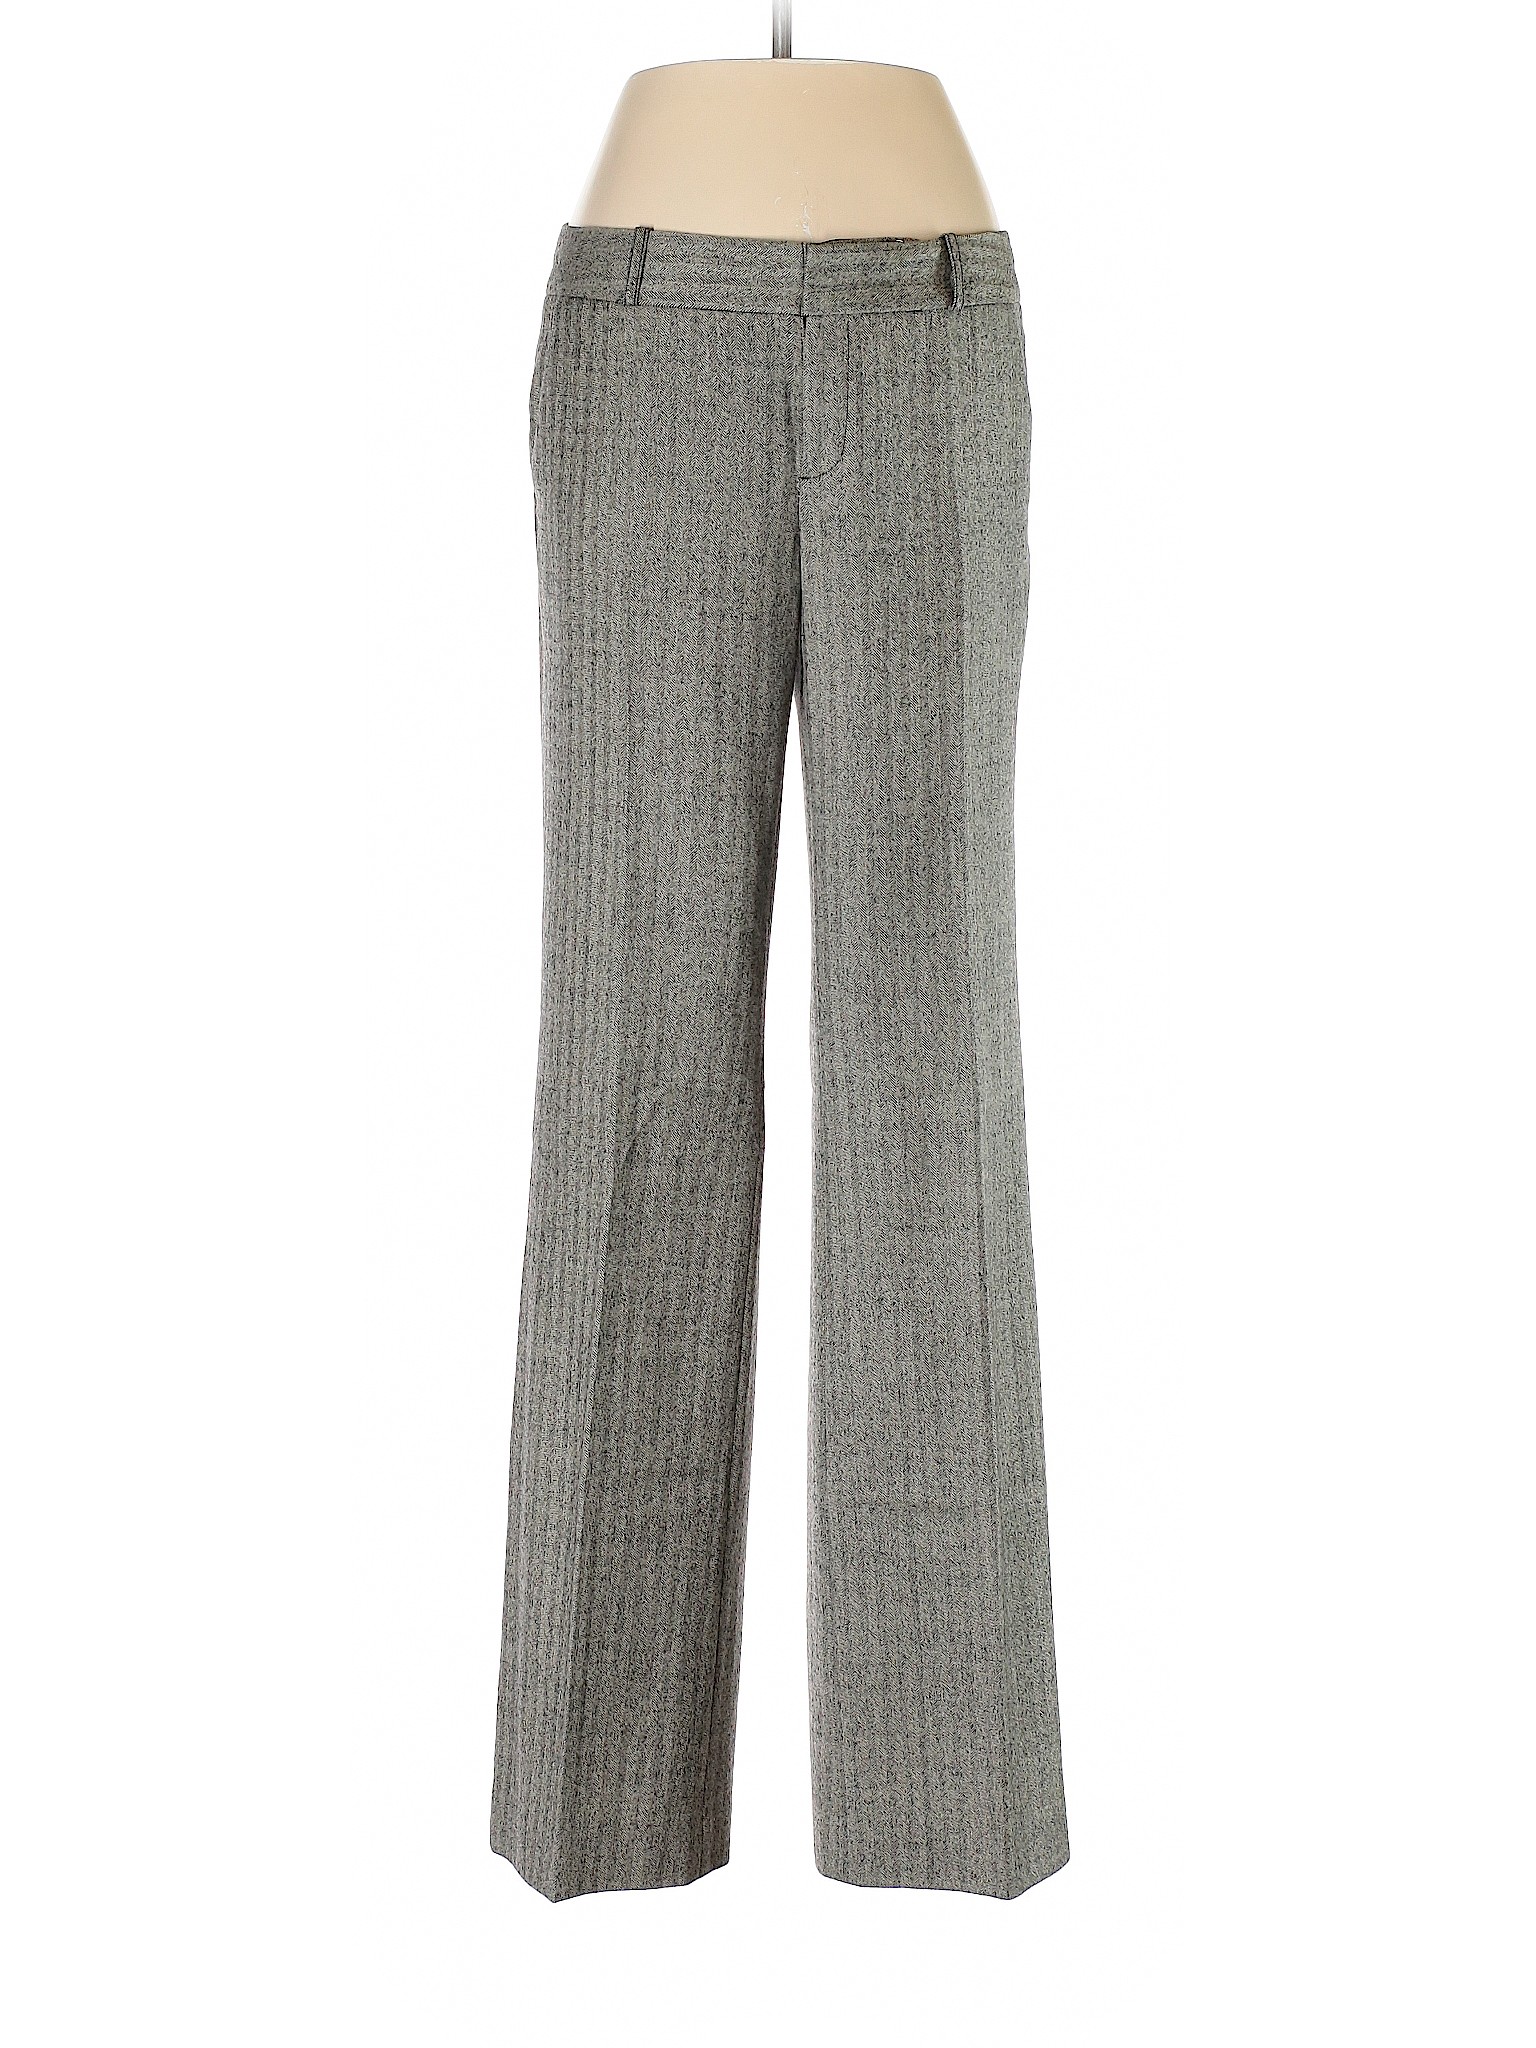 Club Monaco Women Gray Wool Pants 6 | eBay